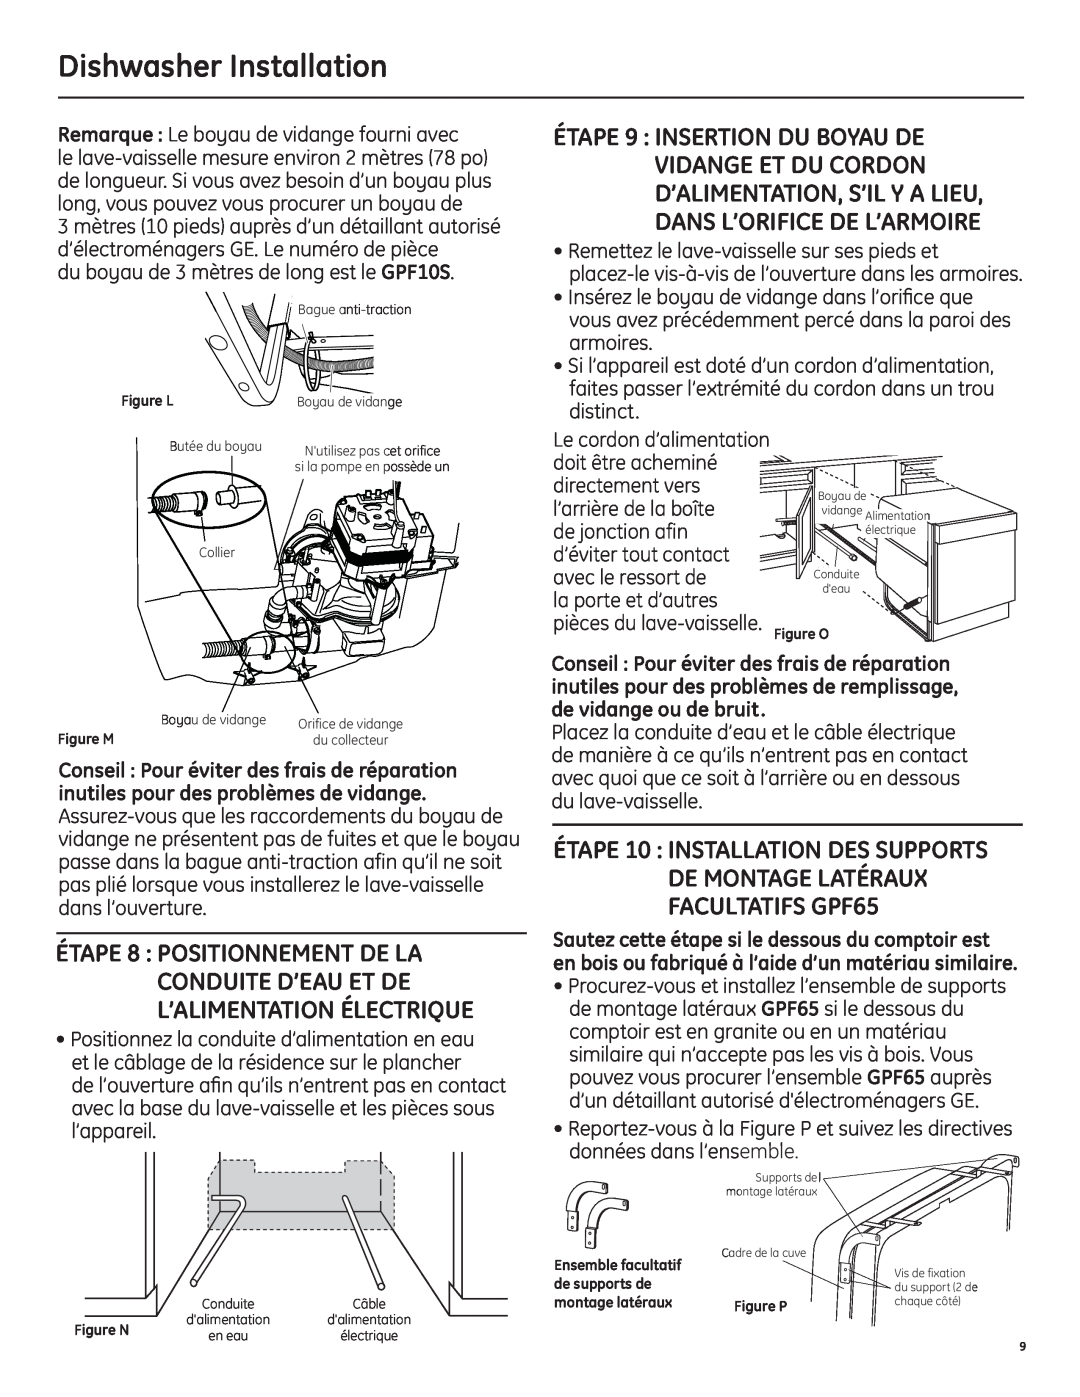 GE 206C1559P195 installation instructions Dishwasher Installation, Remarque Le boyau de vidange fourni avec 